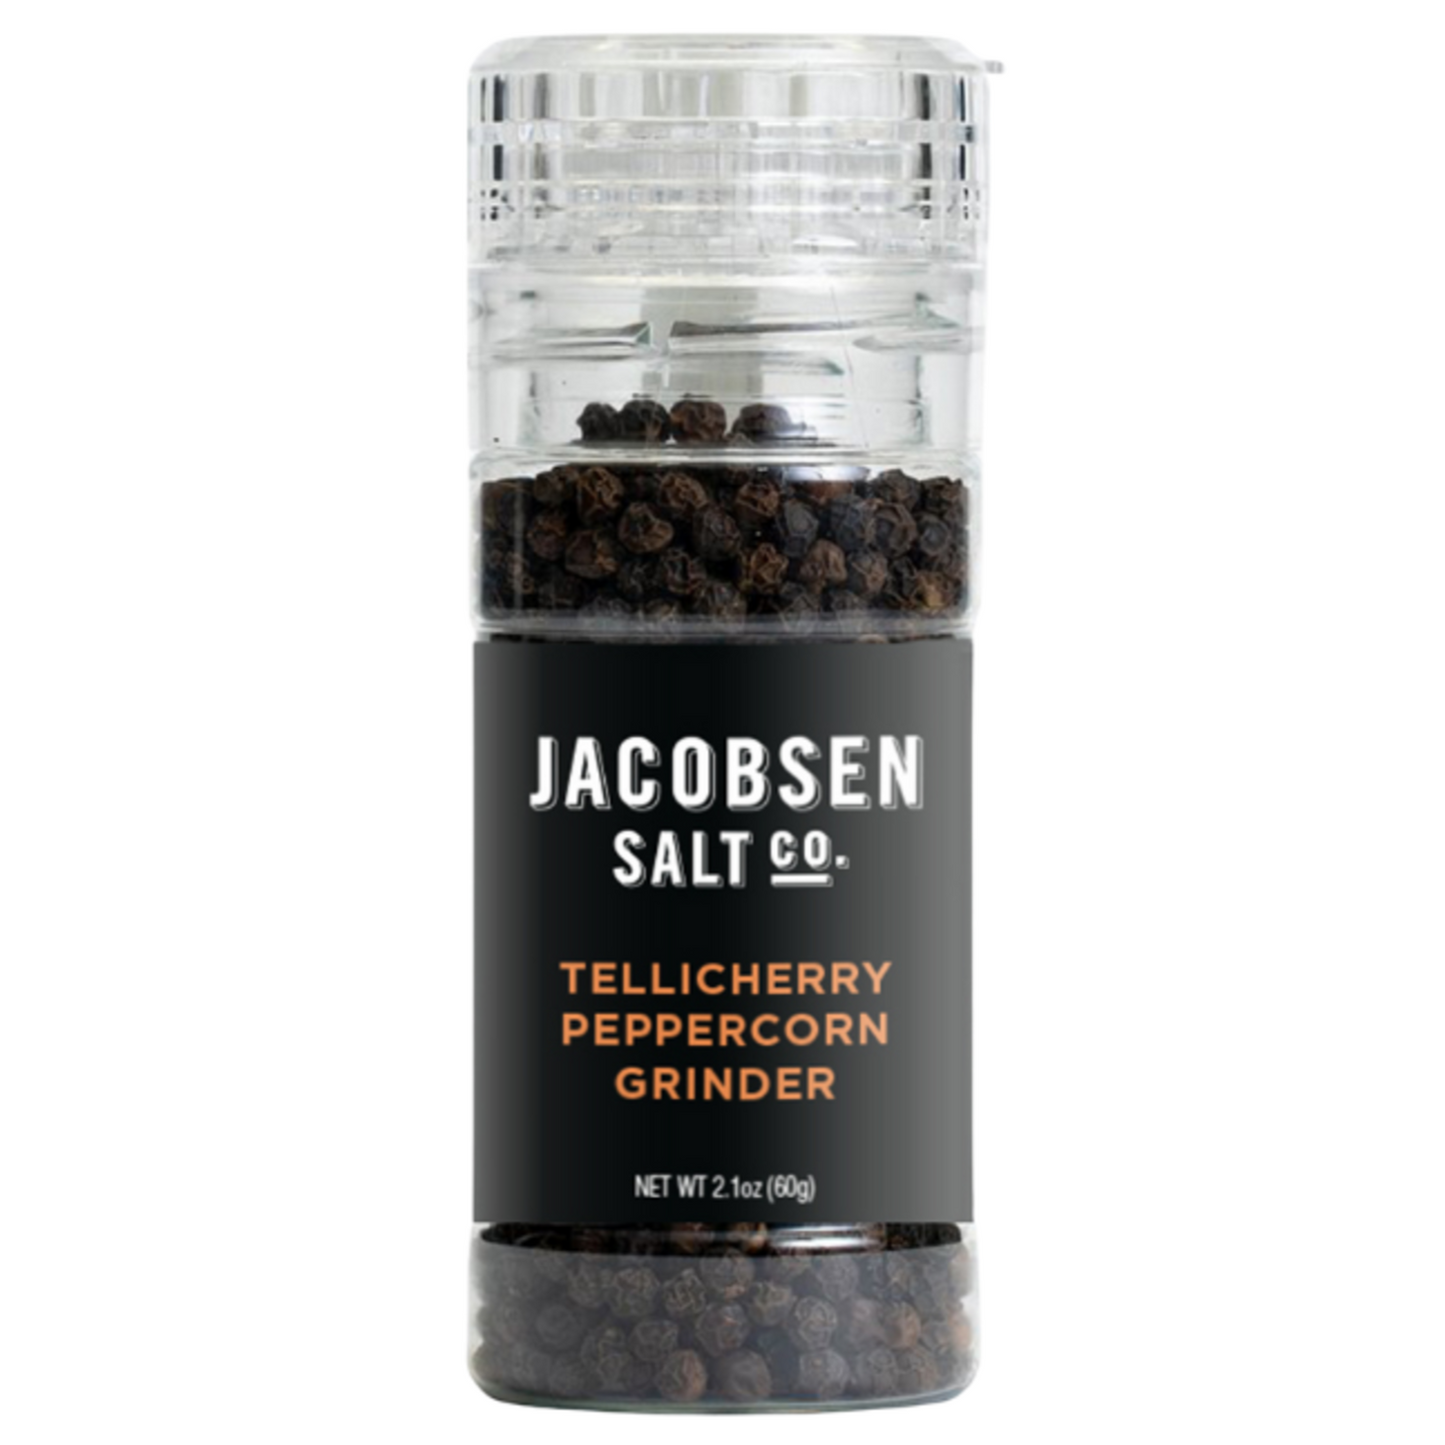 Jacobsen Salt Co - Tellicherry Peppercorn Grinder (1.6OZ)